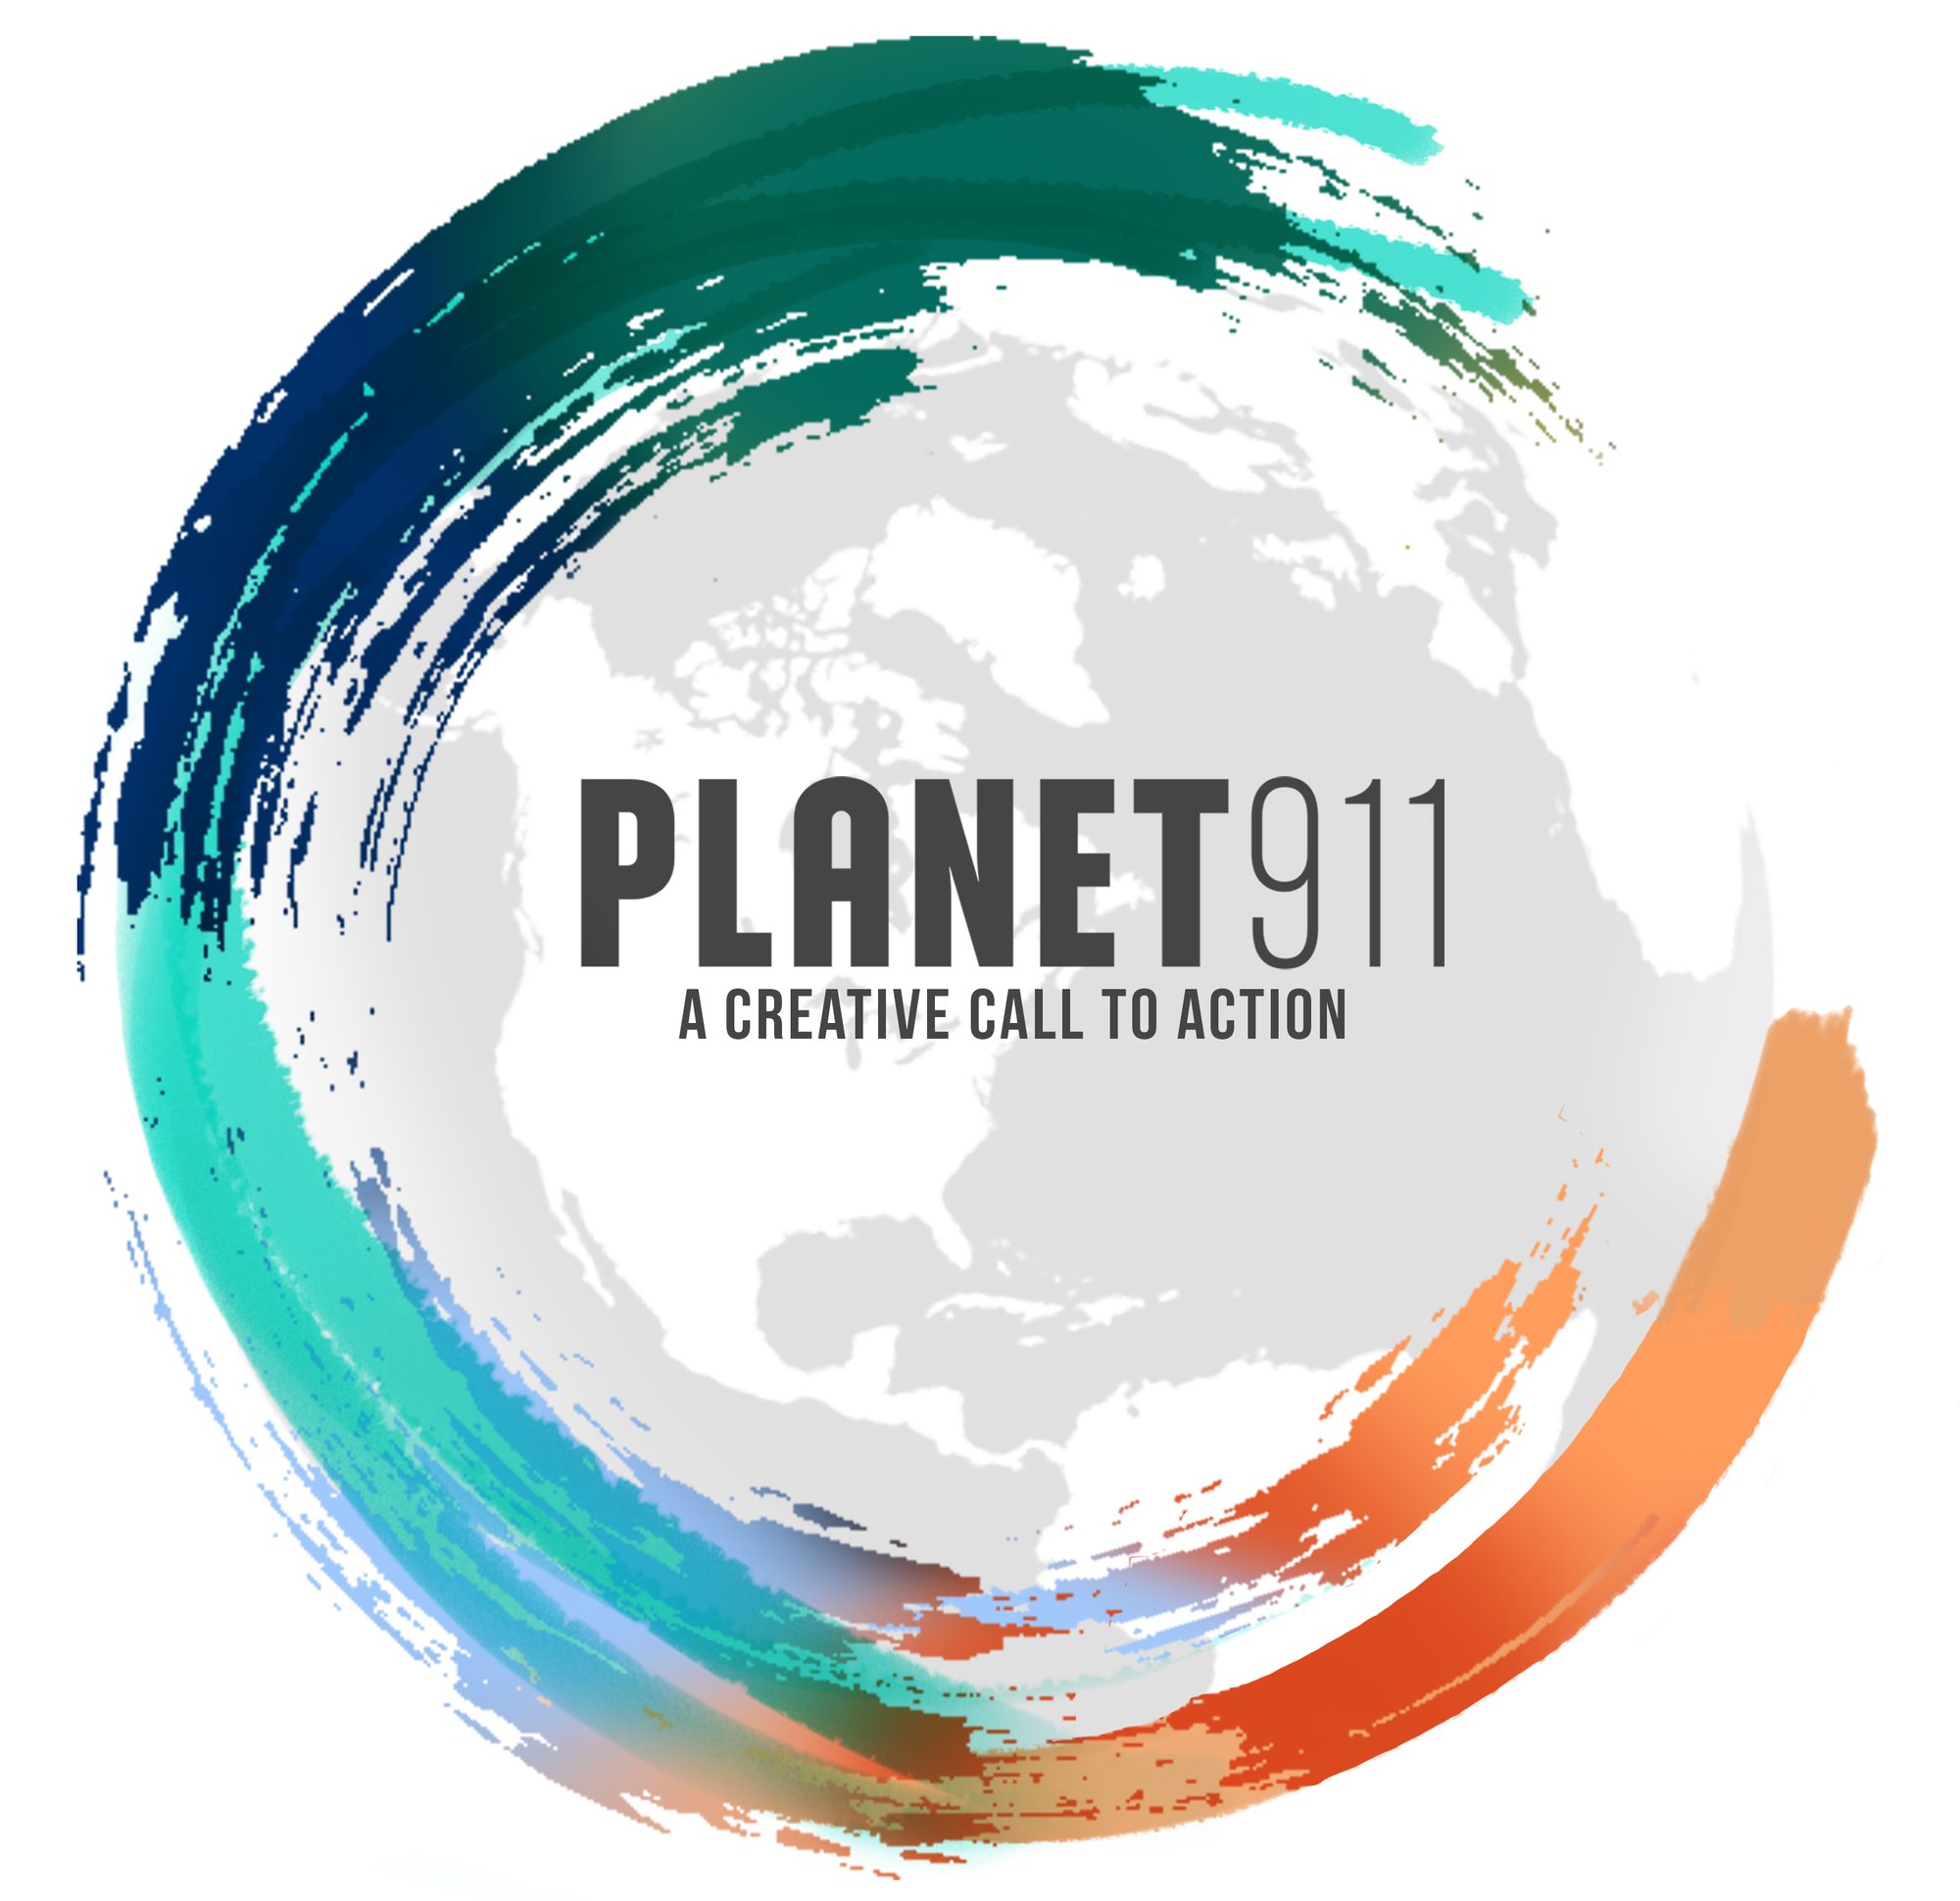 Planet 911